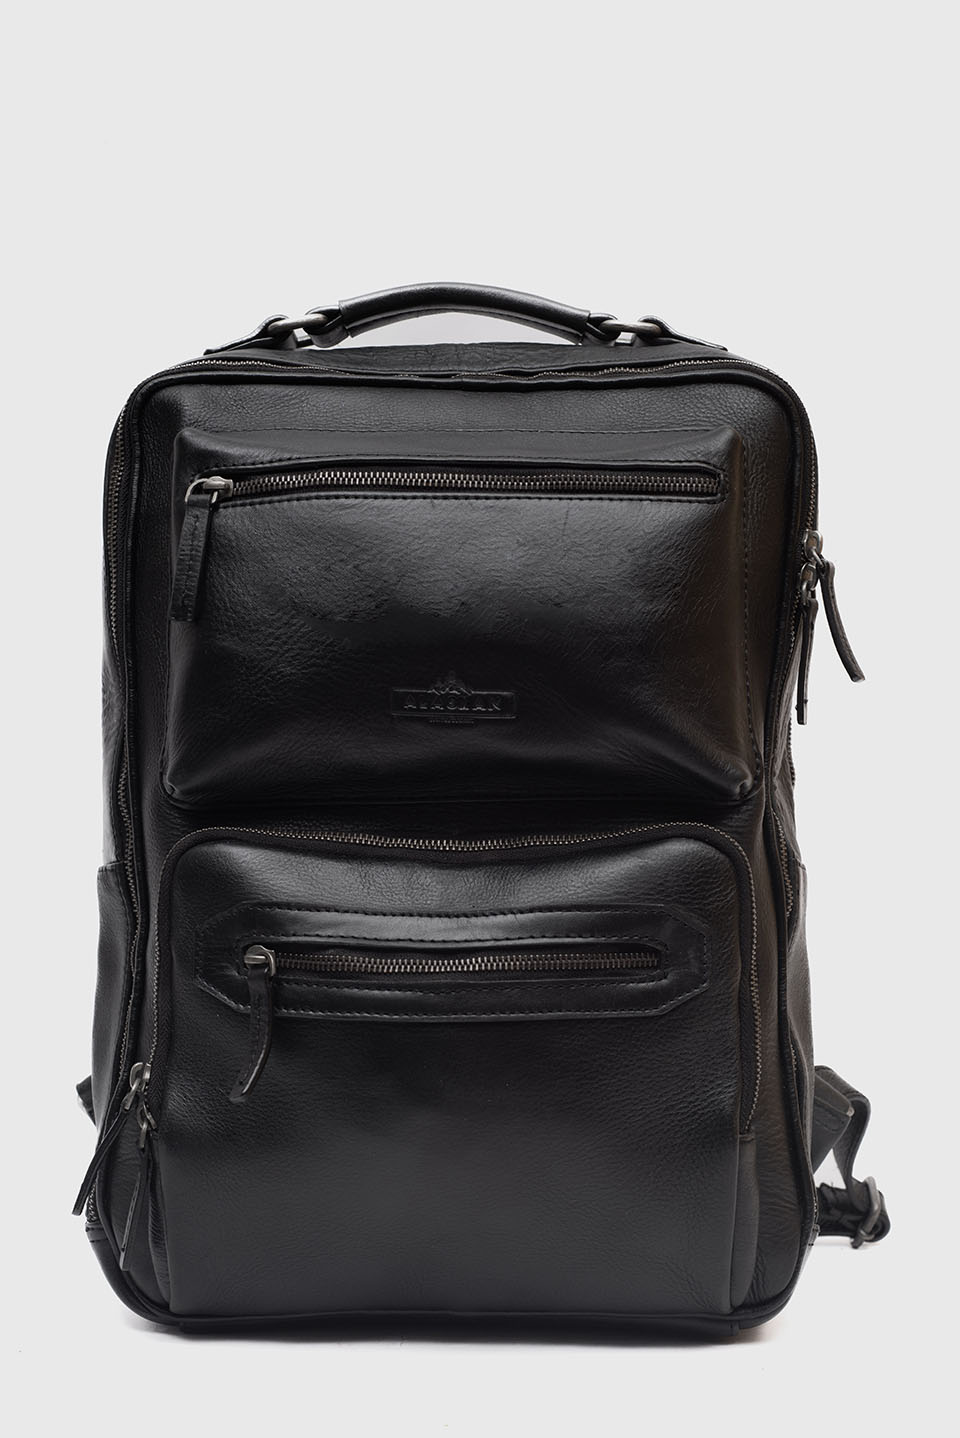 kurt-black-leather-laptop-backpack